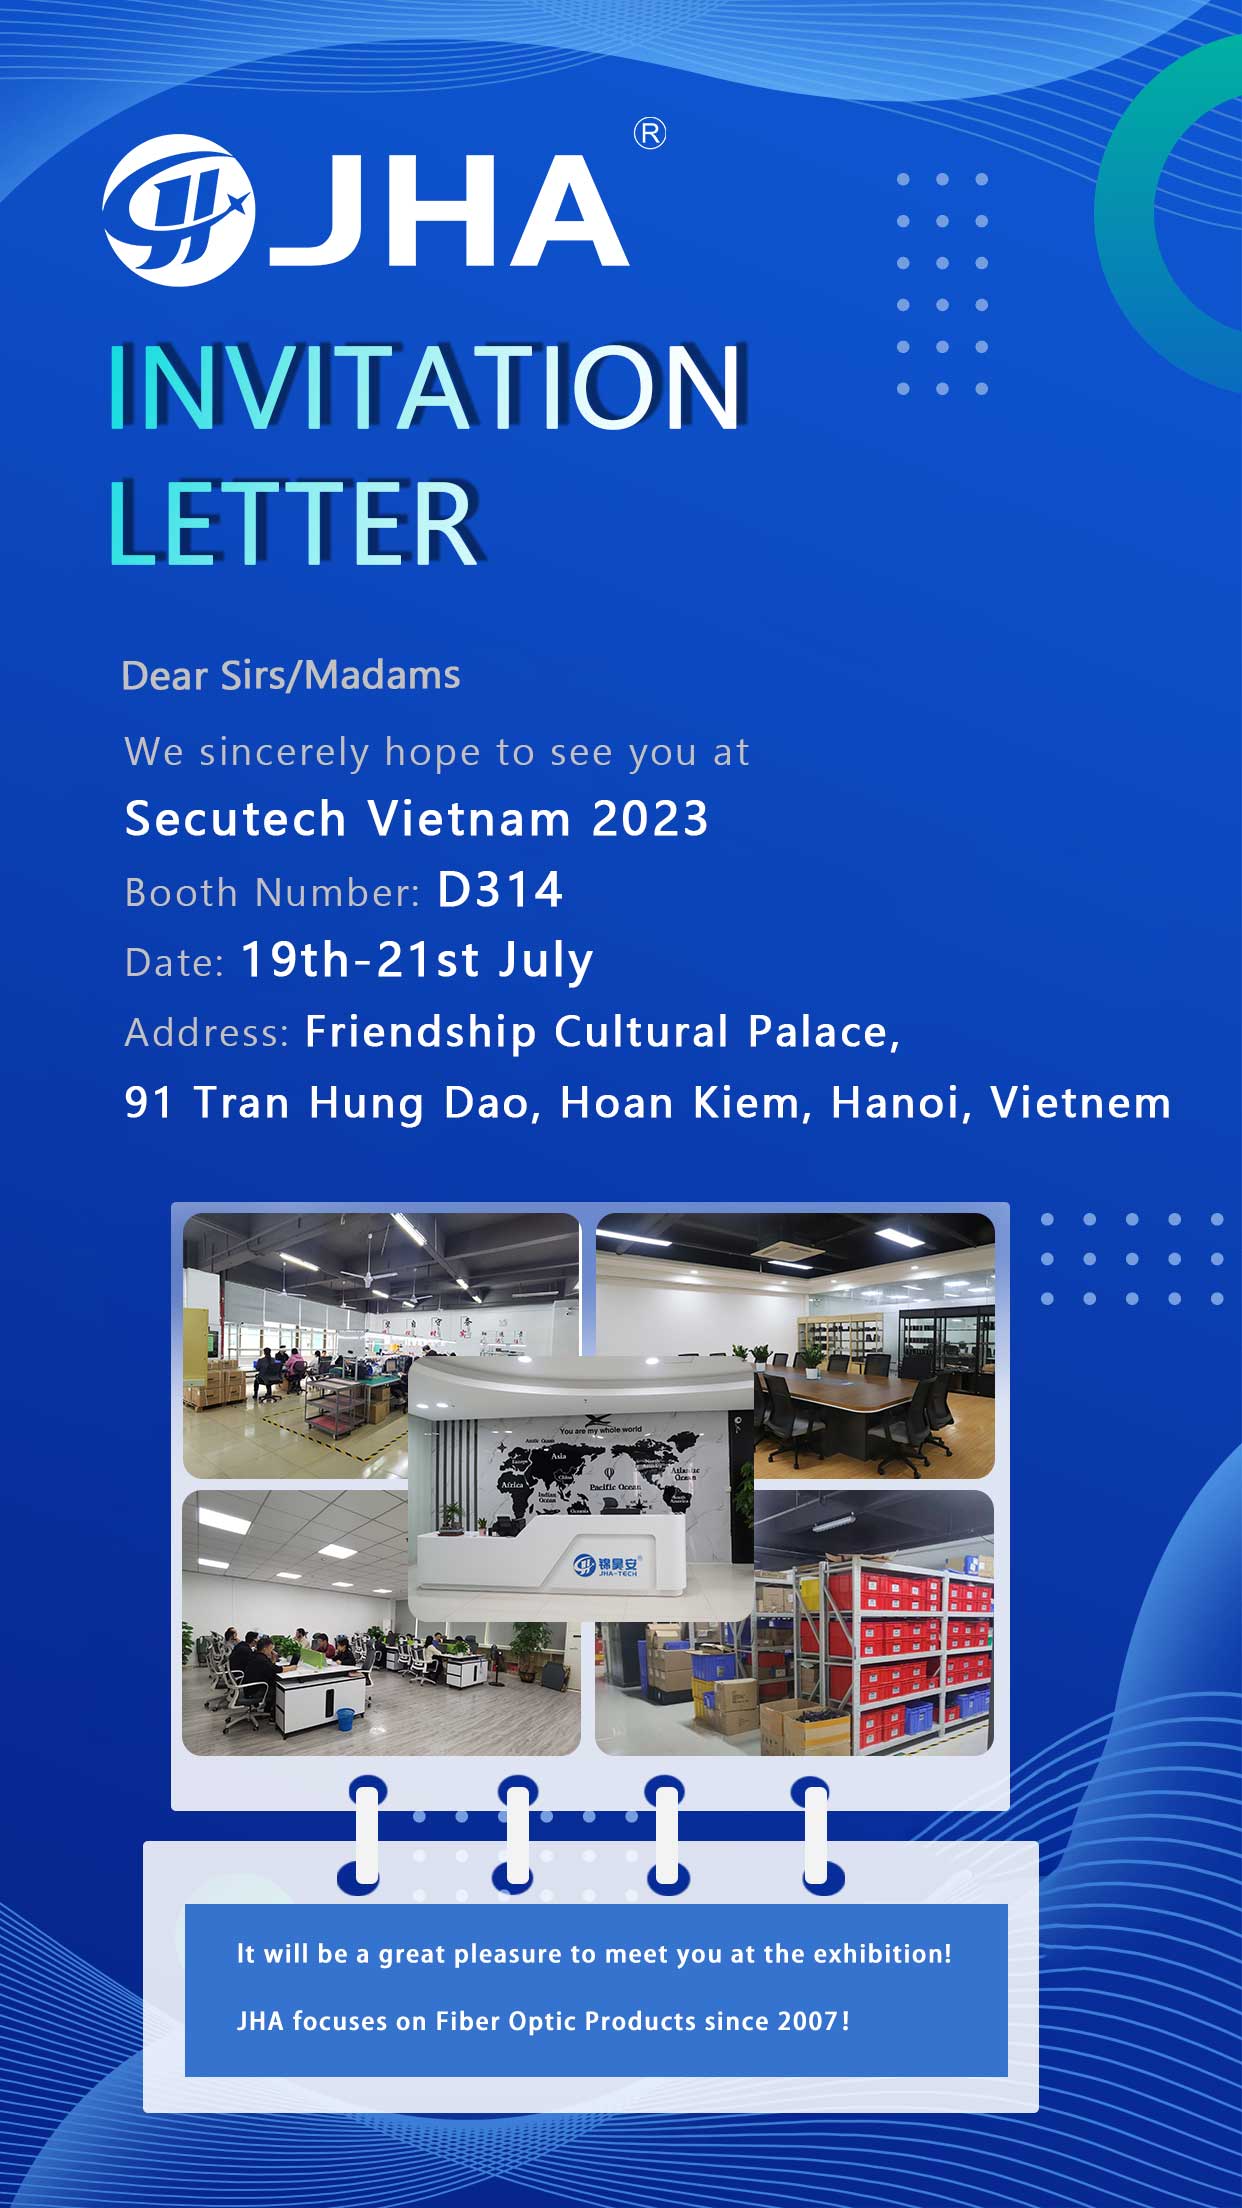 Secutech Vietnam 2023 - بوتھ نمبر D314 میں ہمارے ساتھ شامل ہوں۔